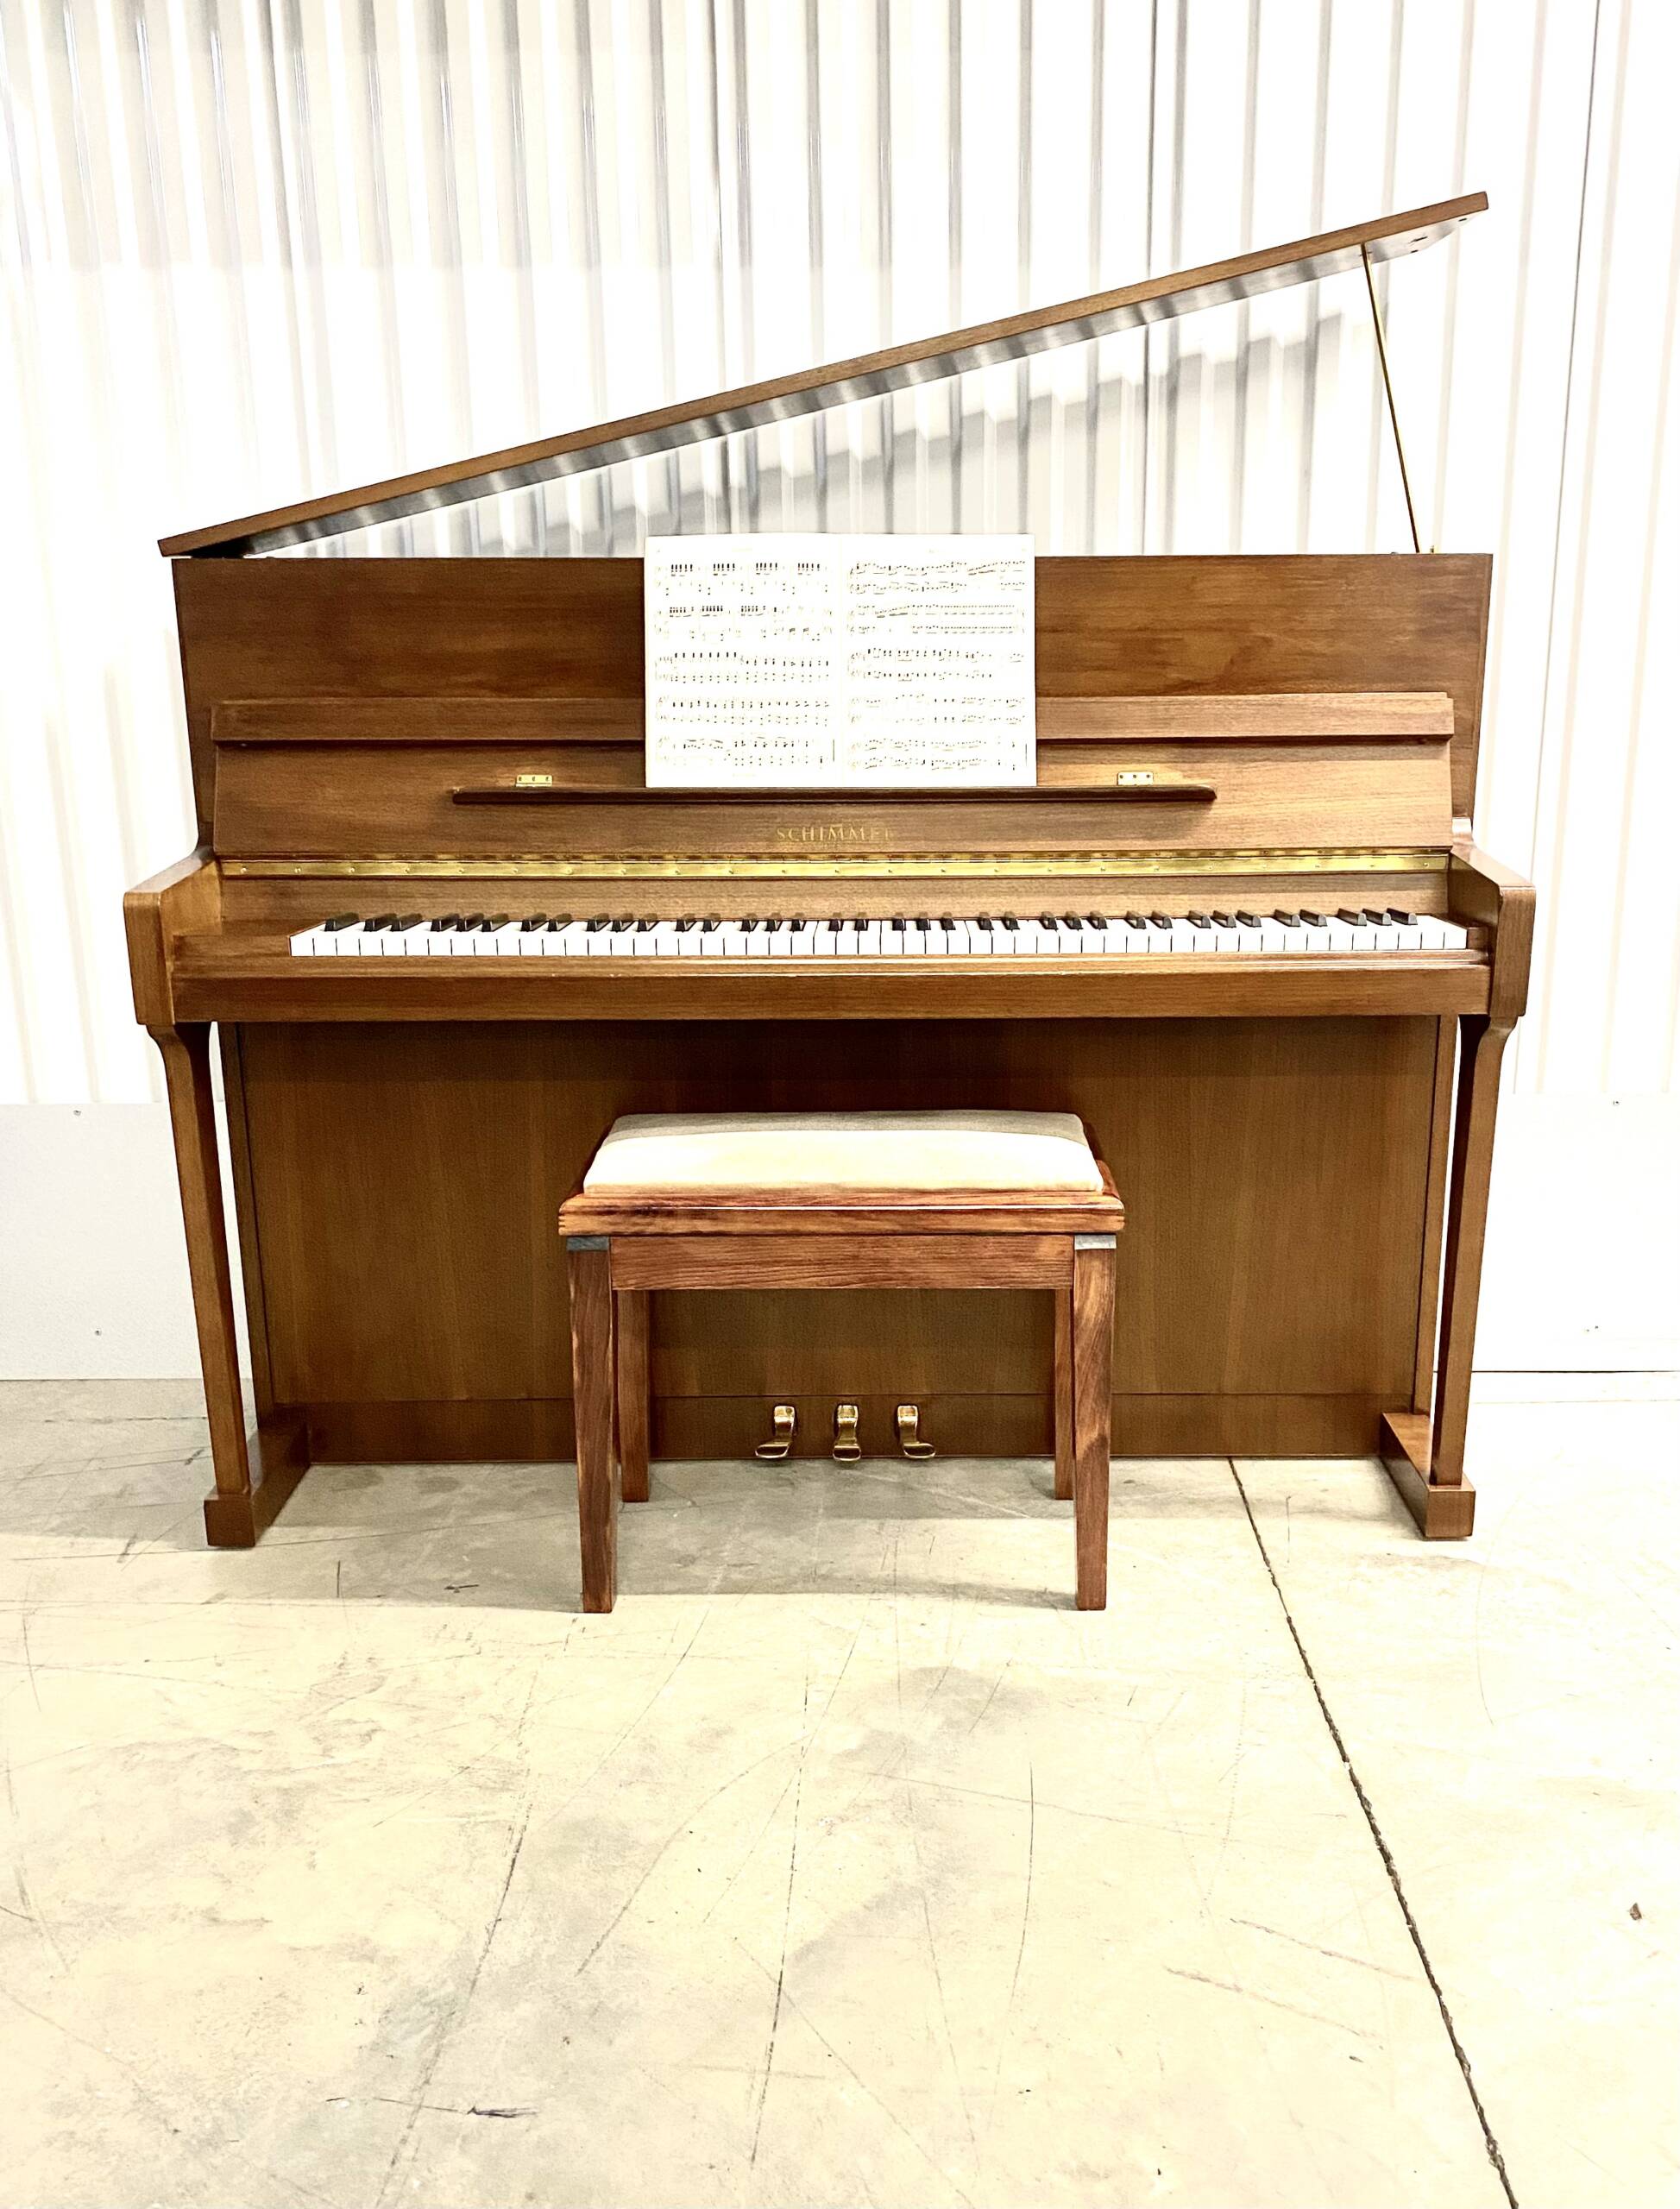 SCHIMMEL. Quality German Compact Piano